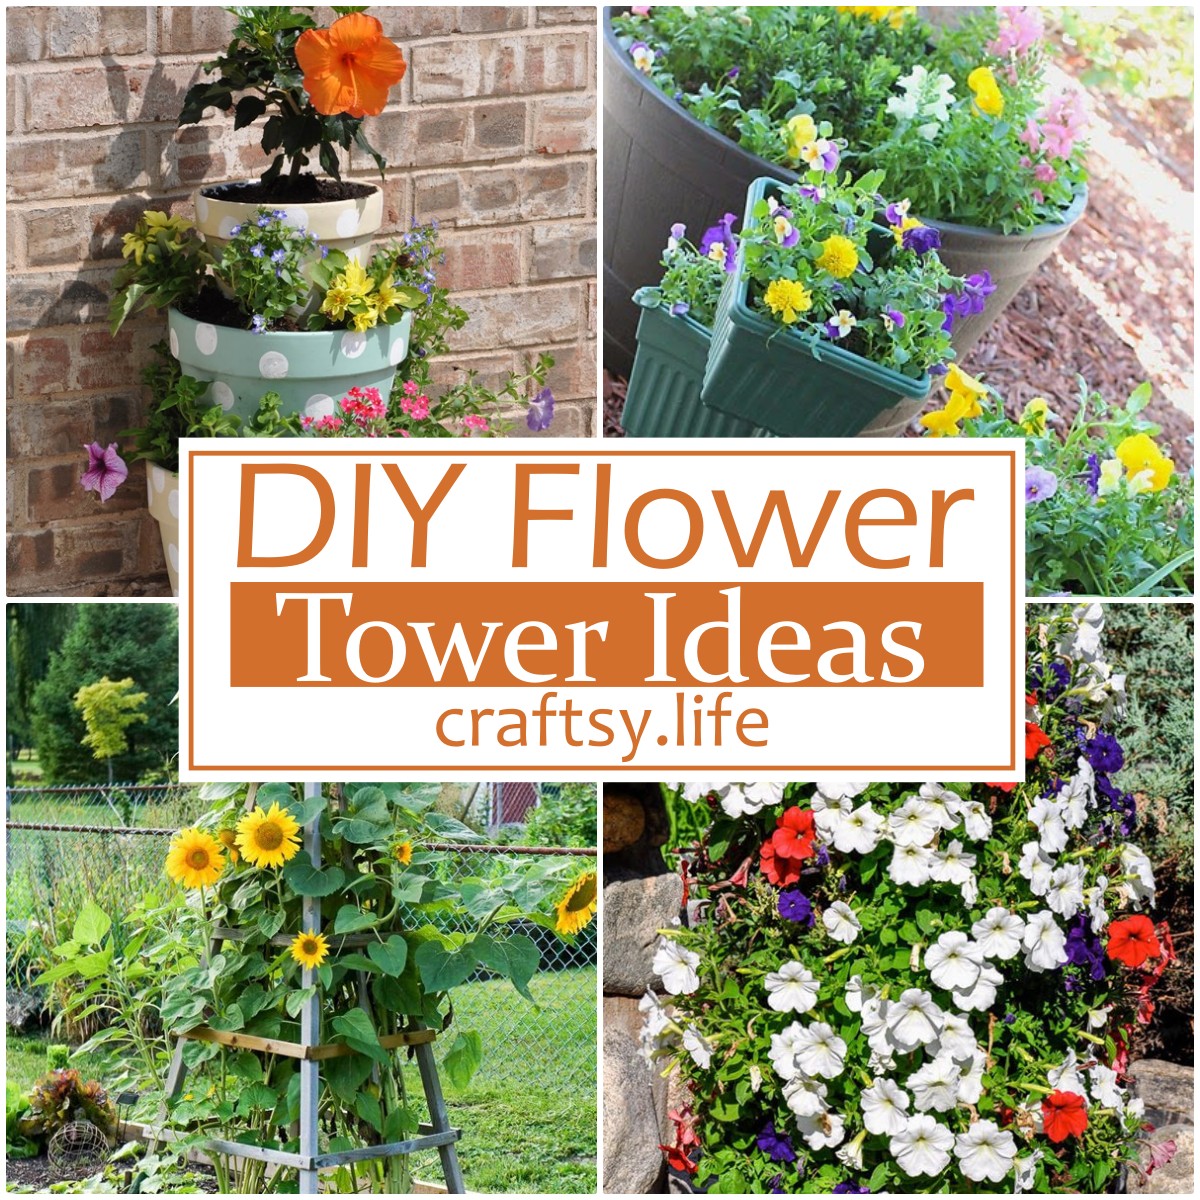 DIY Flower Tower Ideas